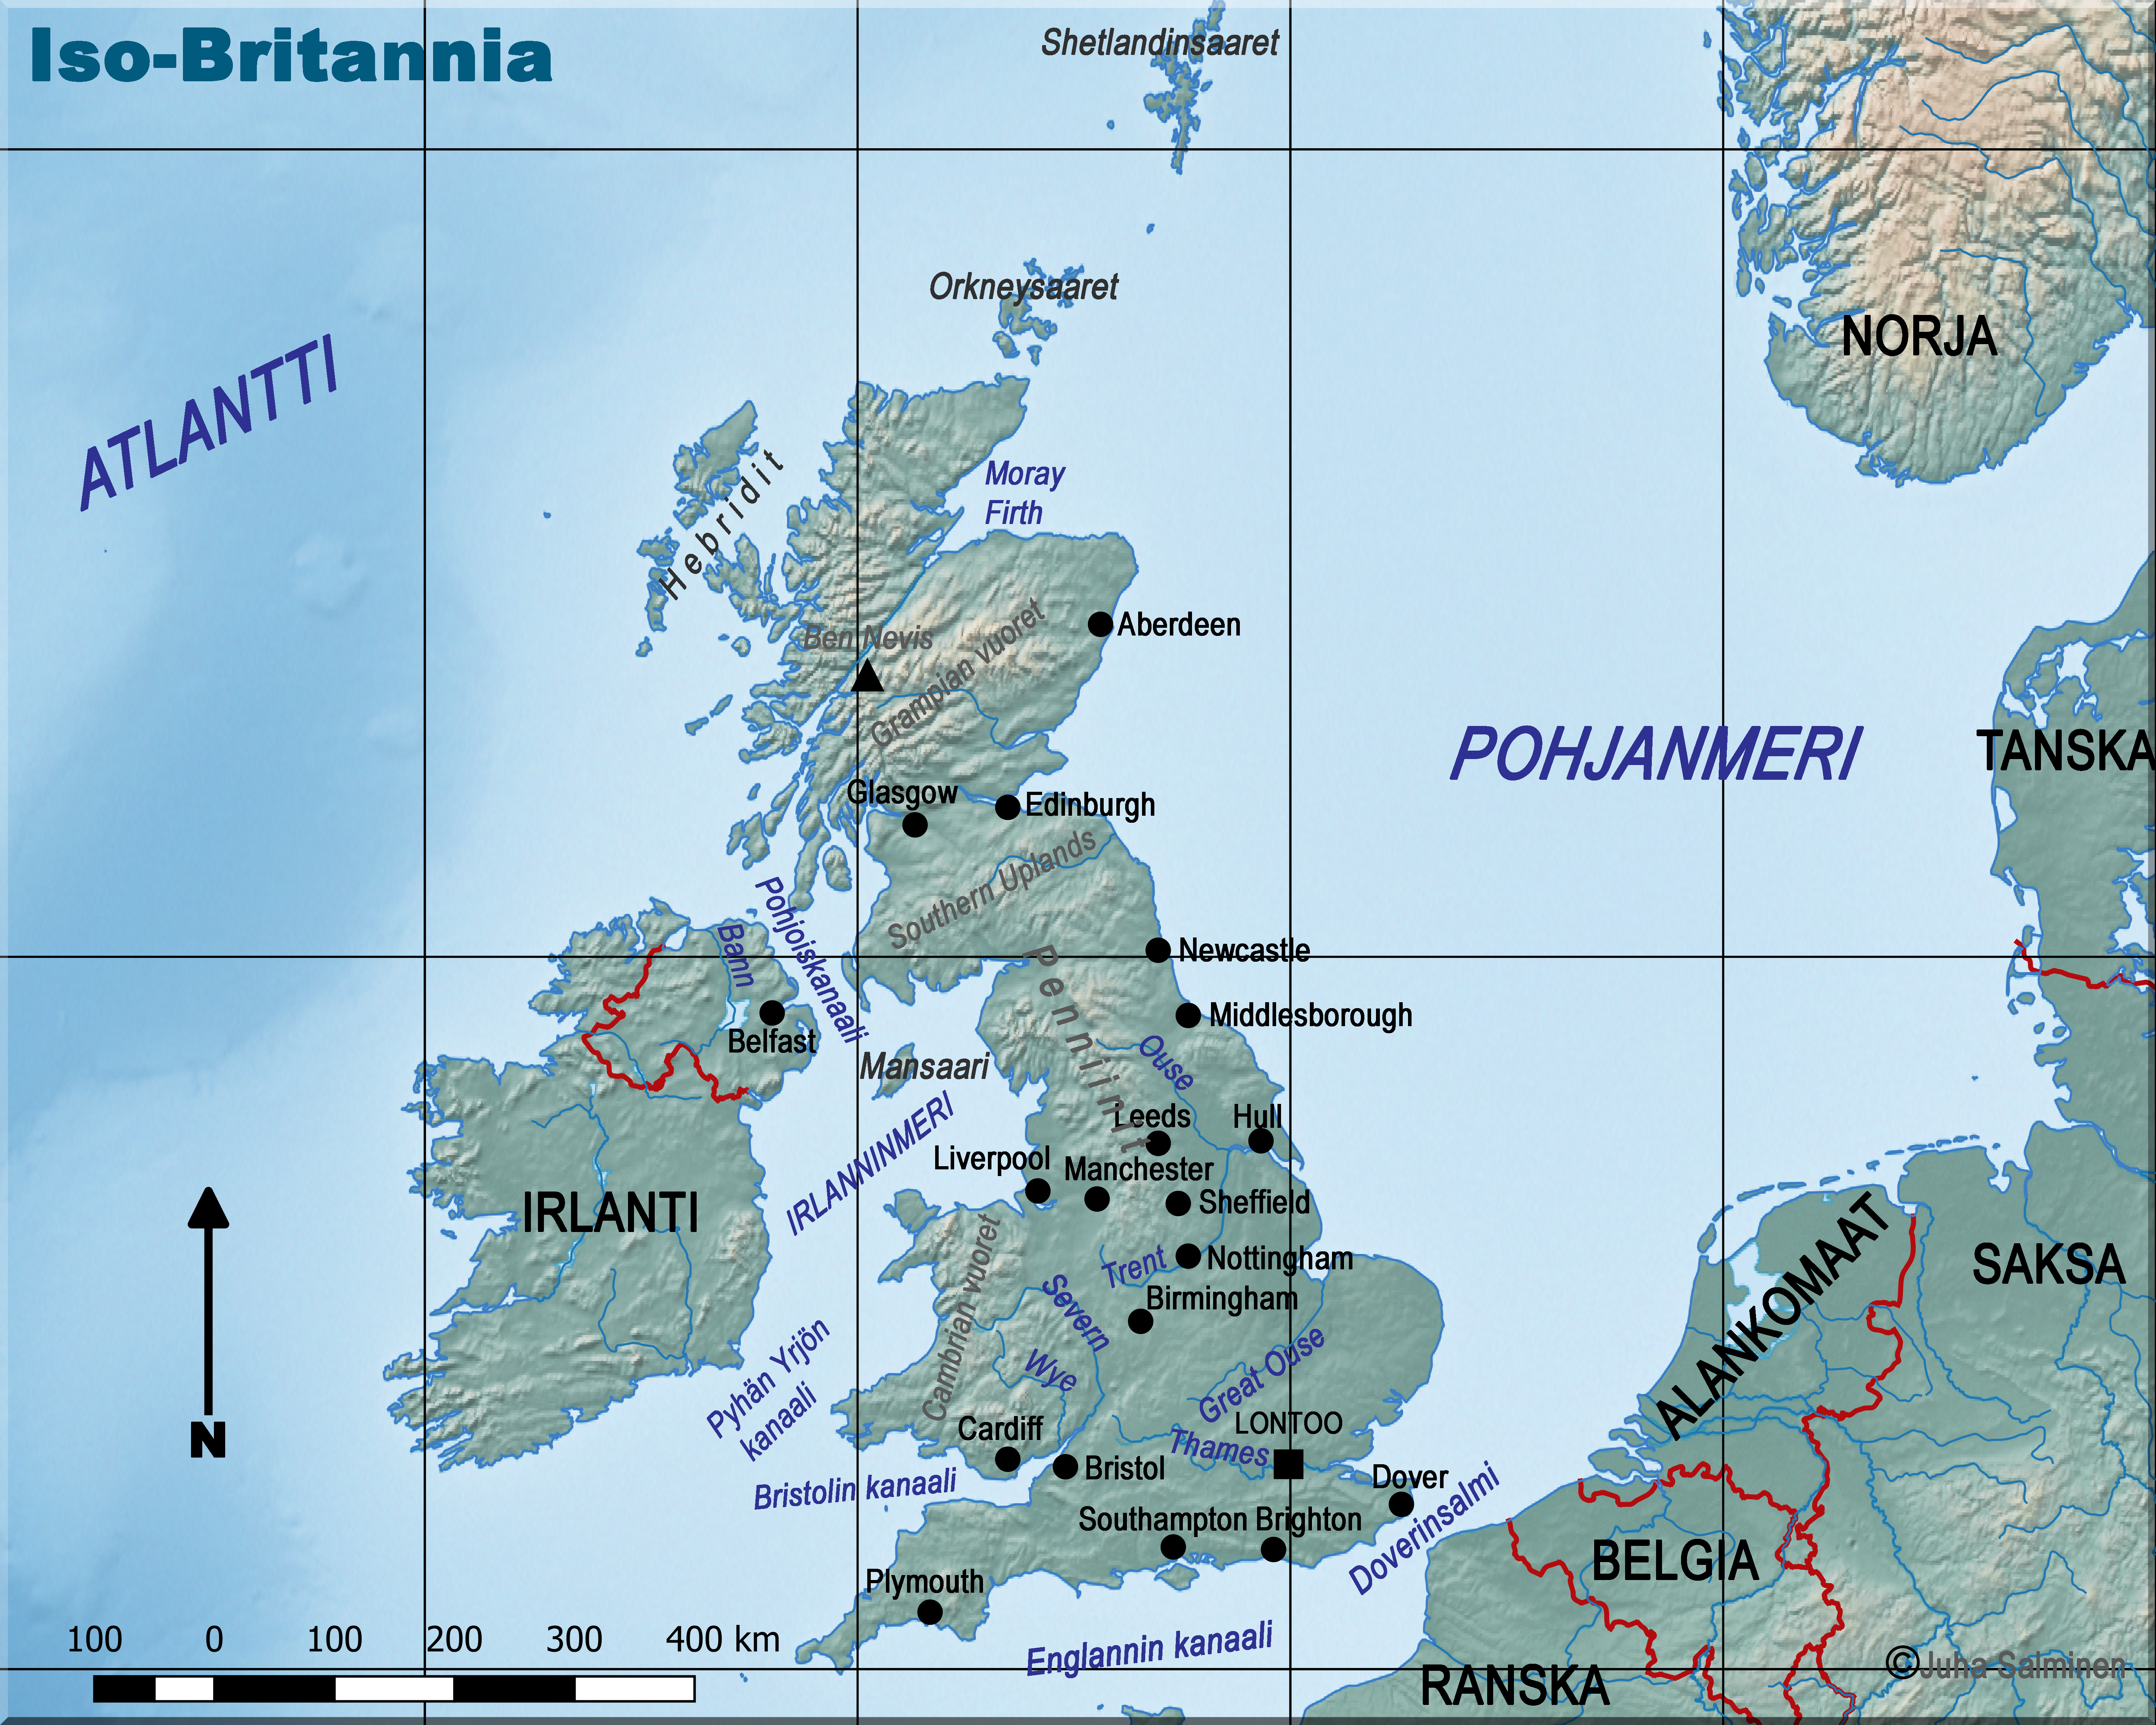 iso britannian kartta Iso Britannian kartta